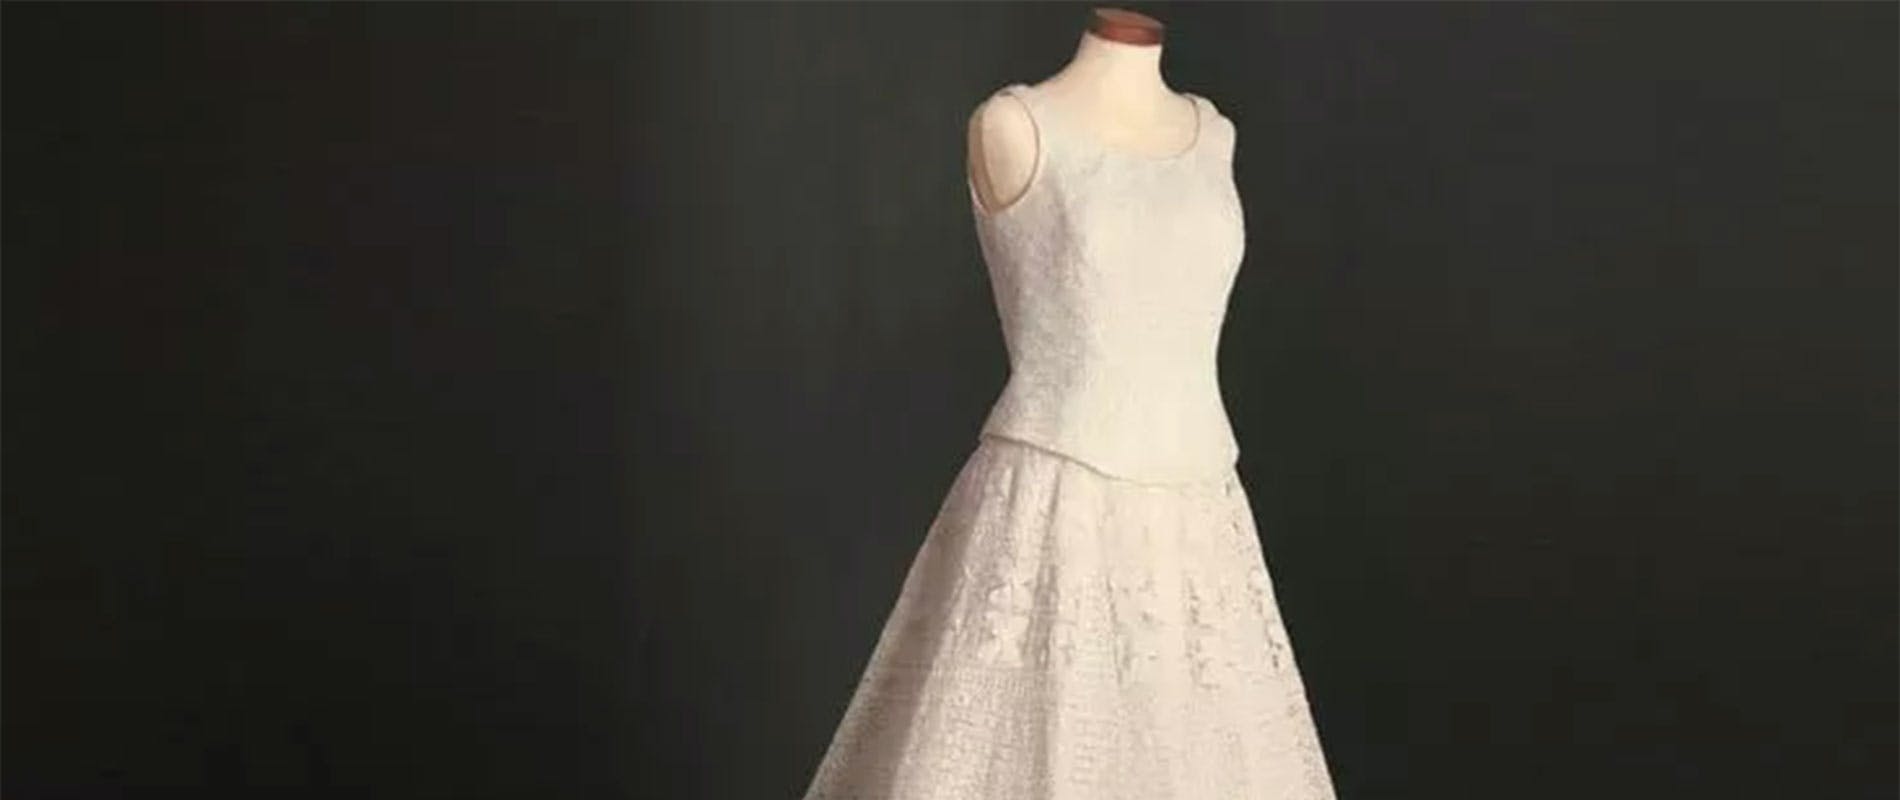 clothing apparel wedding gown fashion wedding gown robe lace